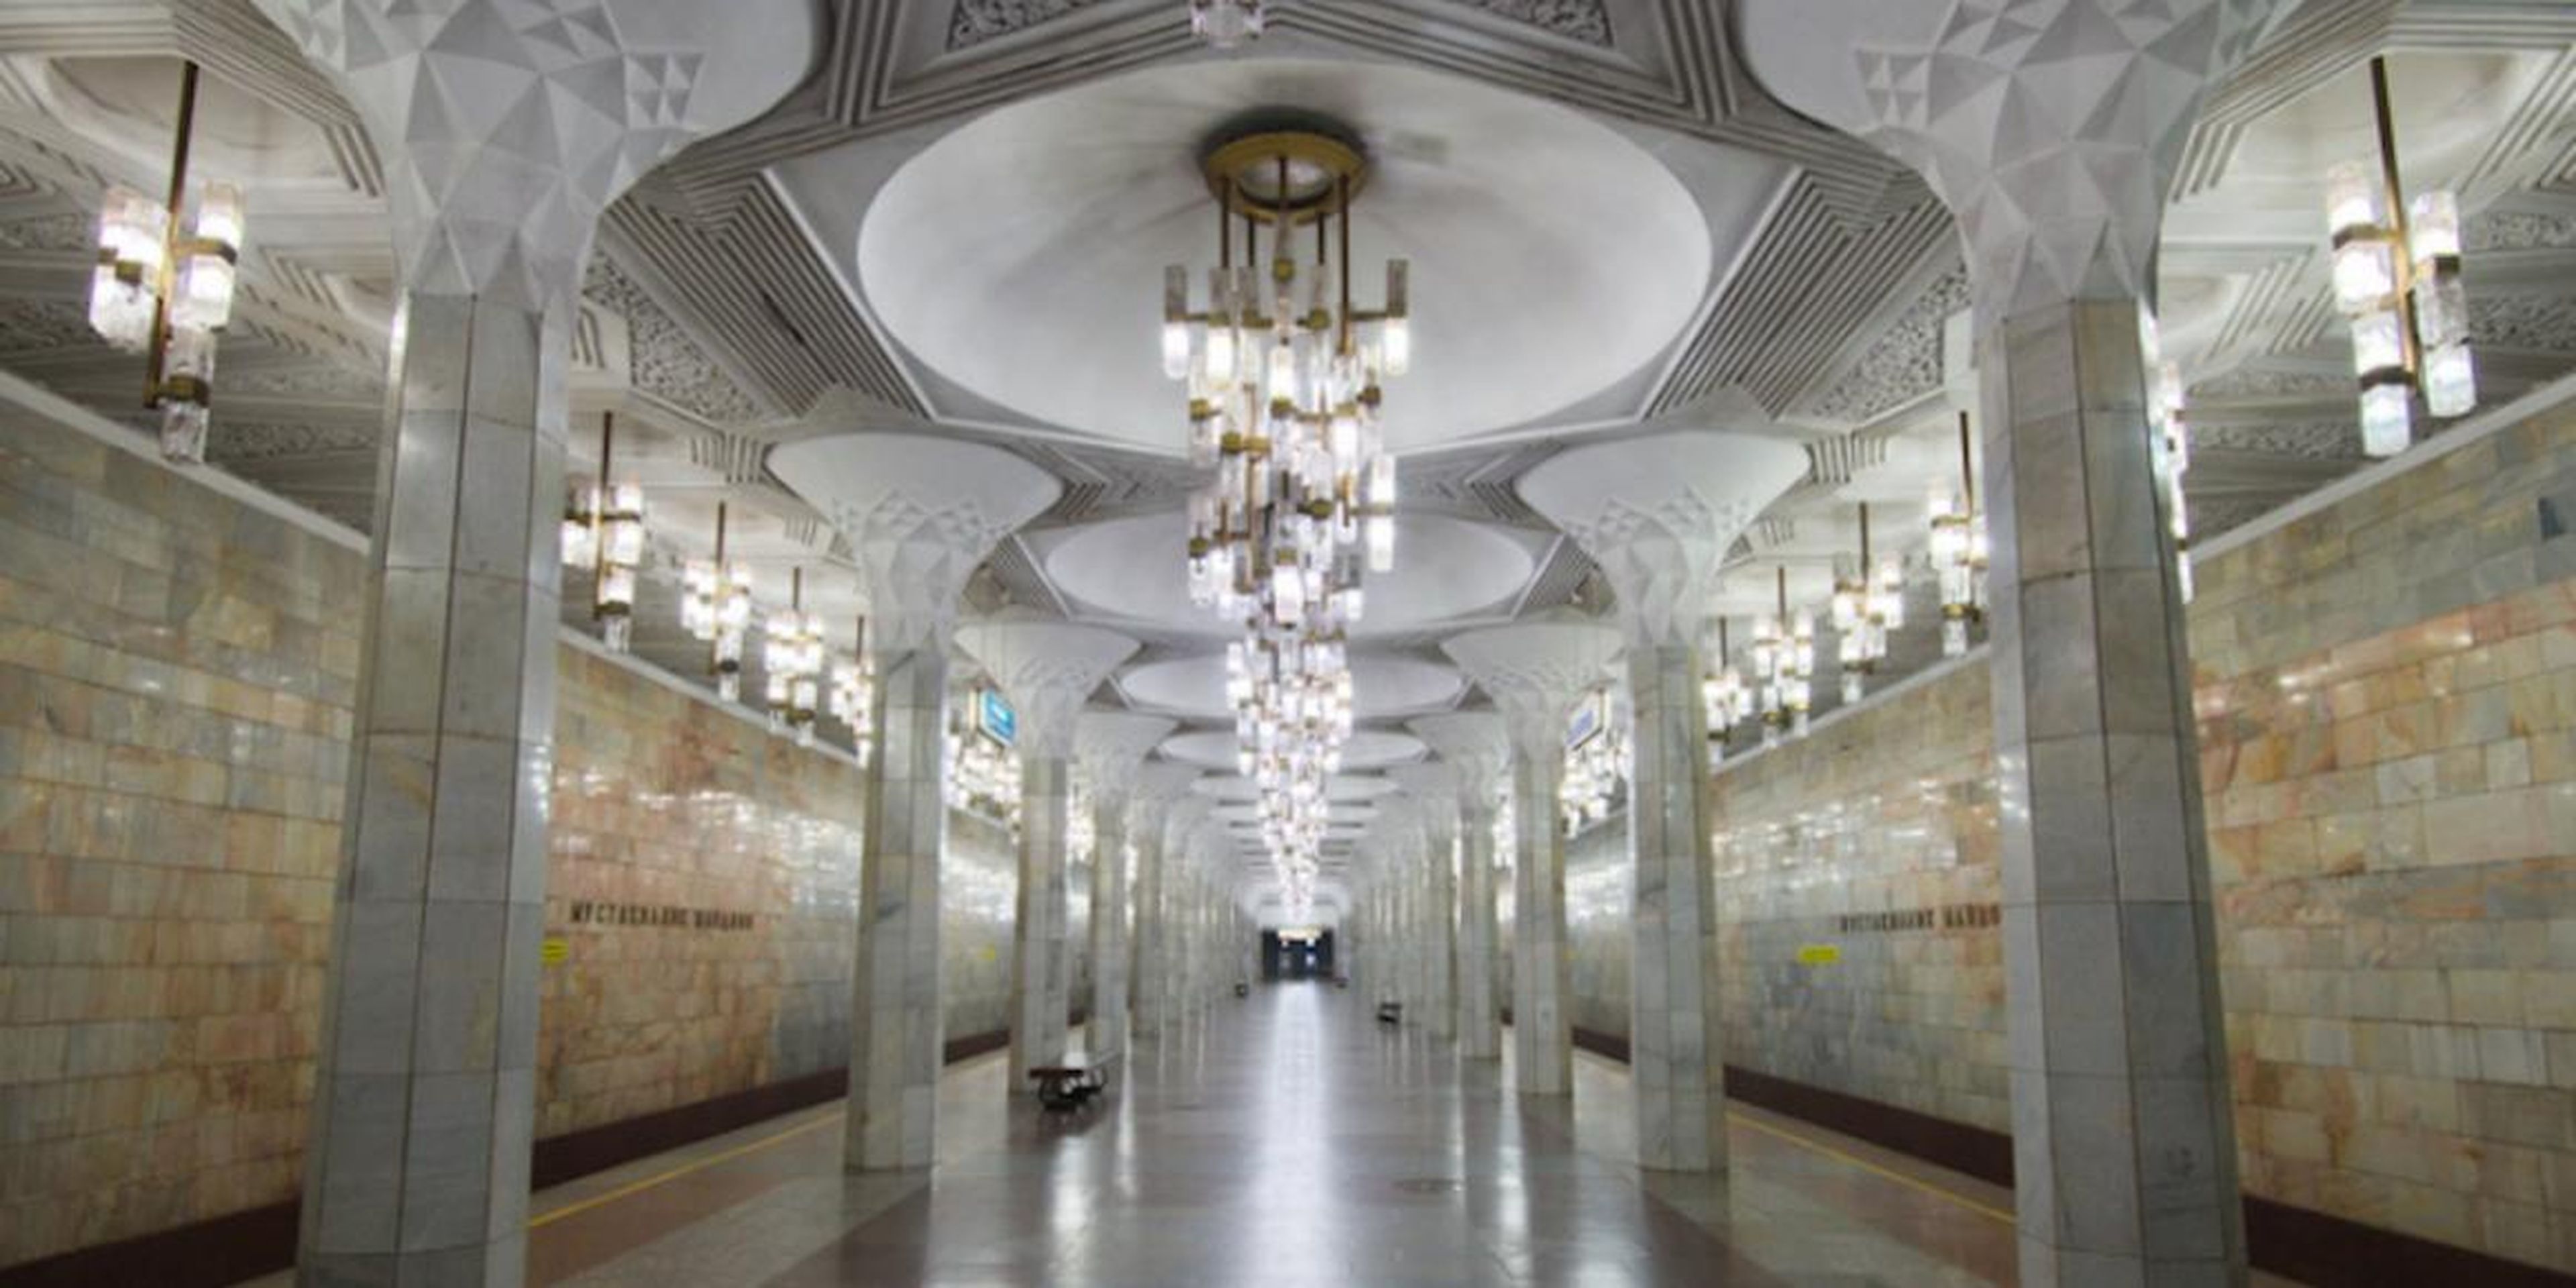 The shimmering interior of the Tashkent subway system.